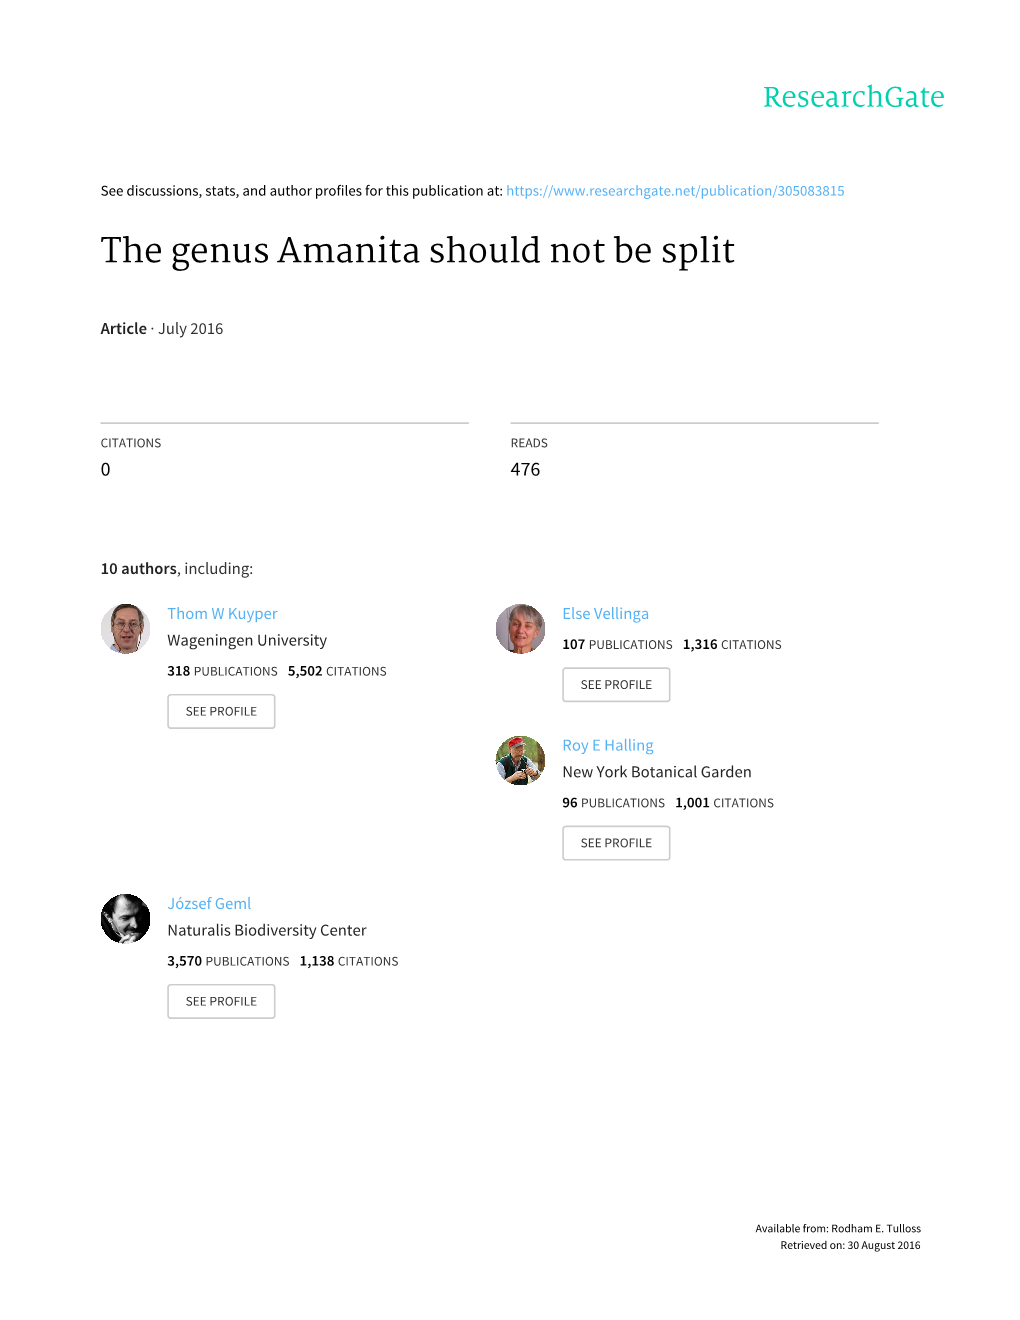 The Genus Amanita Should Not Be Split